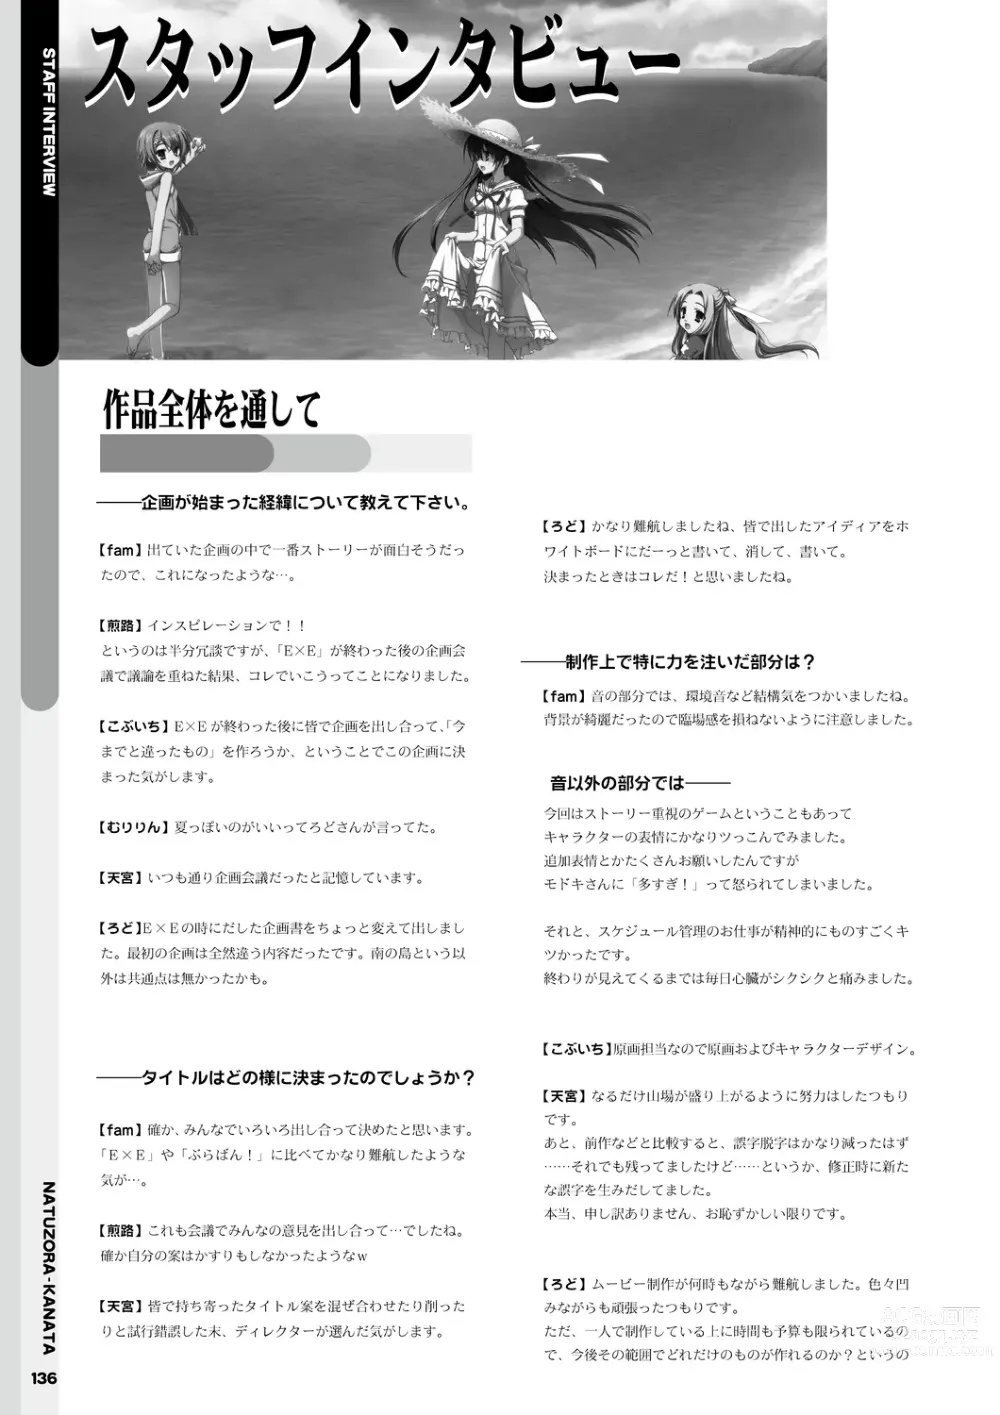 Page 138 of manga Natsuzora Kanata Official Visual Fan Book